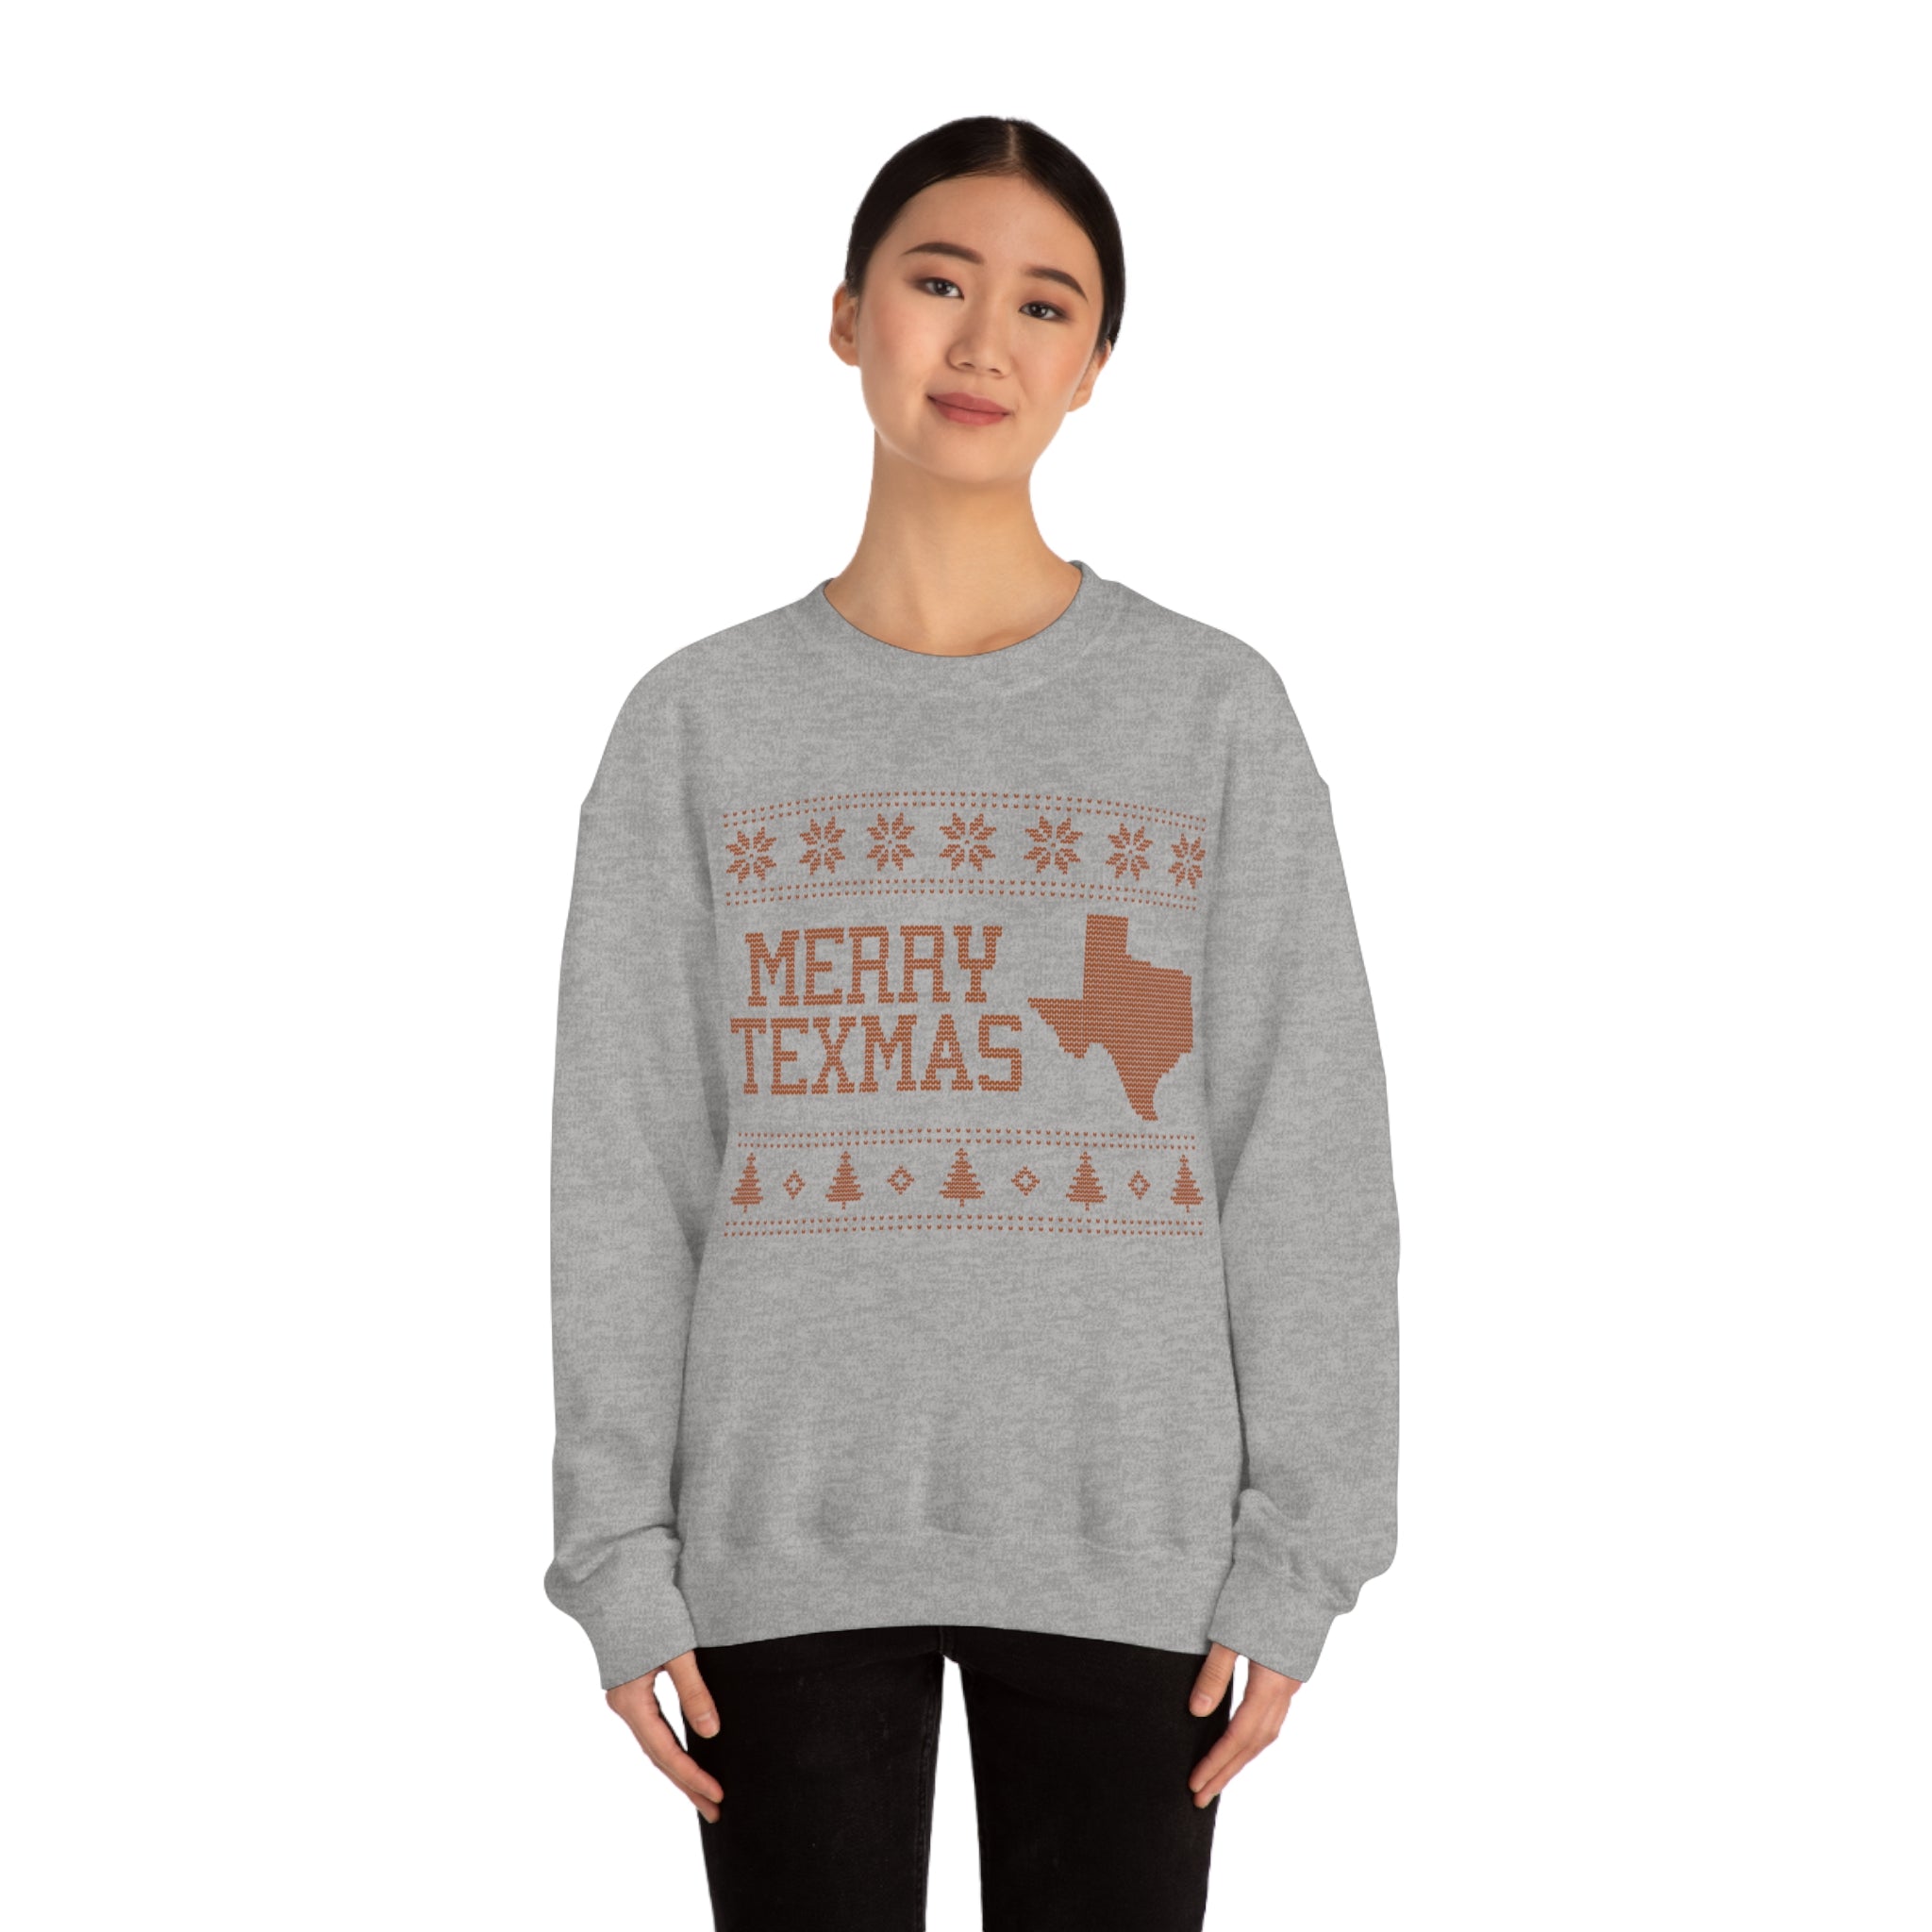 Merry Texmas Sweatshirt